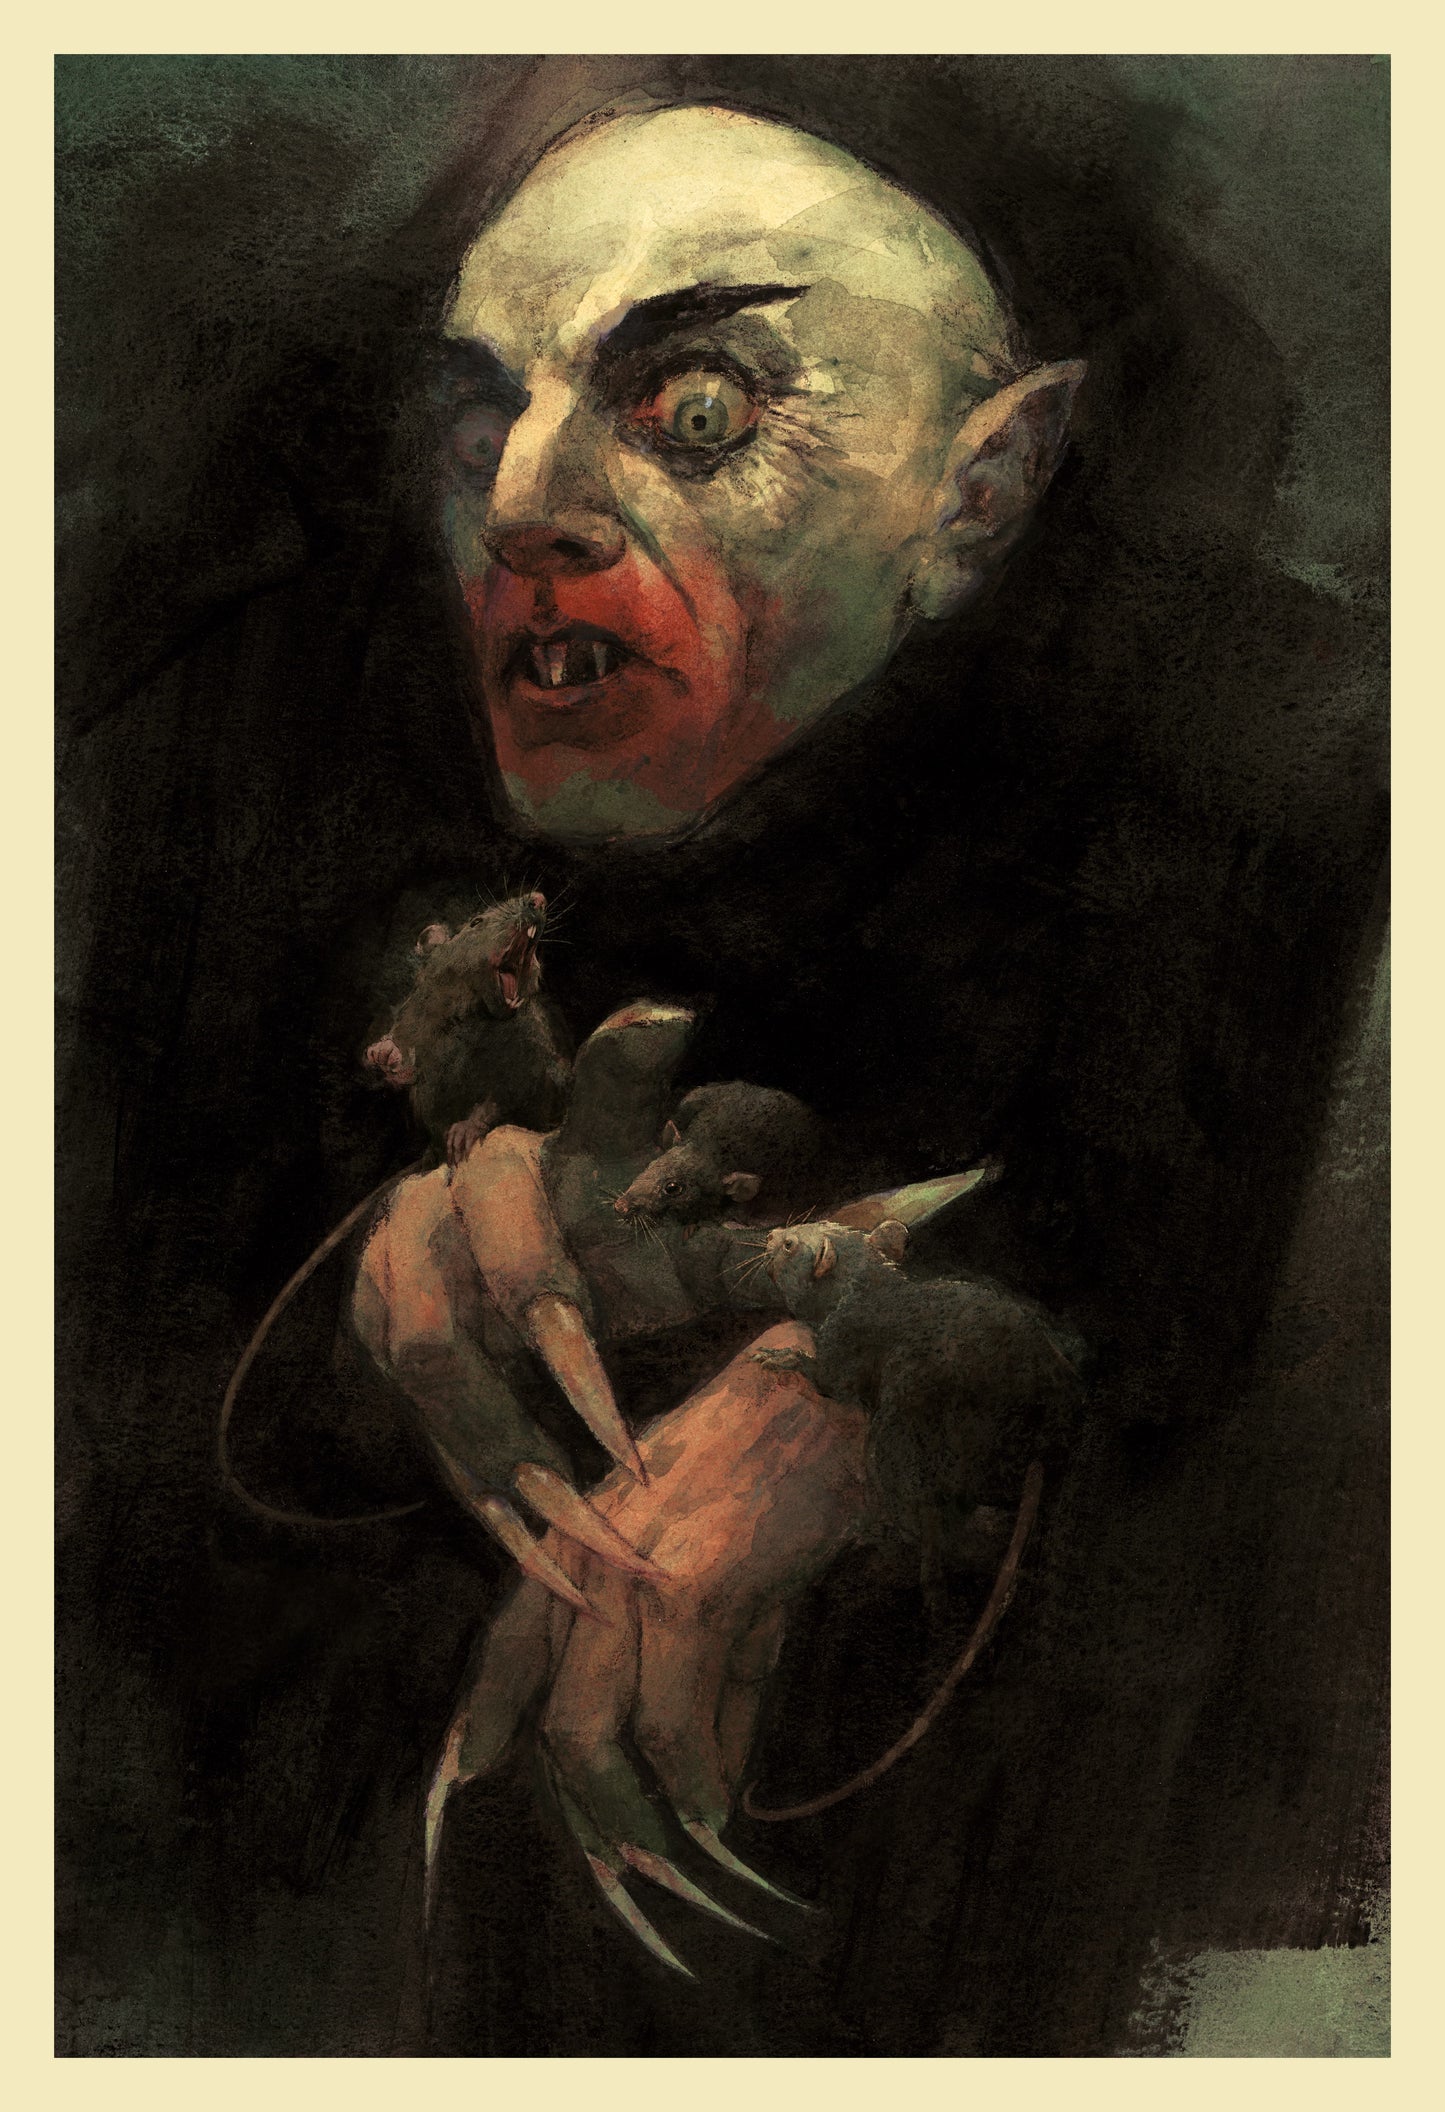 Nosferatu by Hans Woody - "A Symphony of Horror" Regular